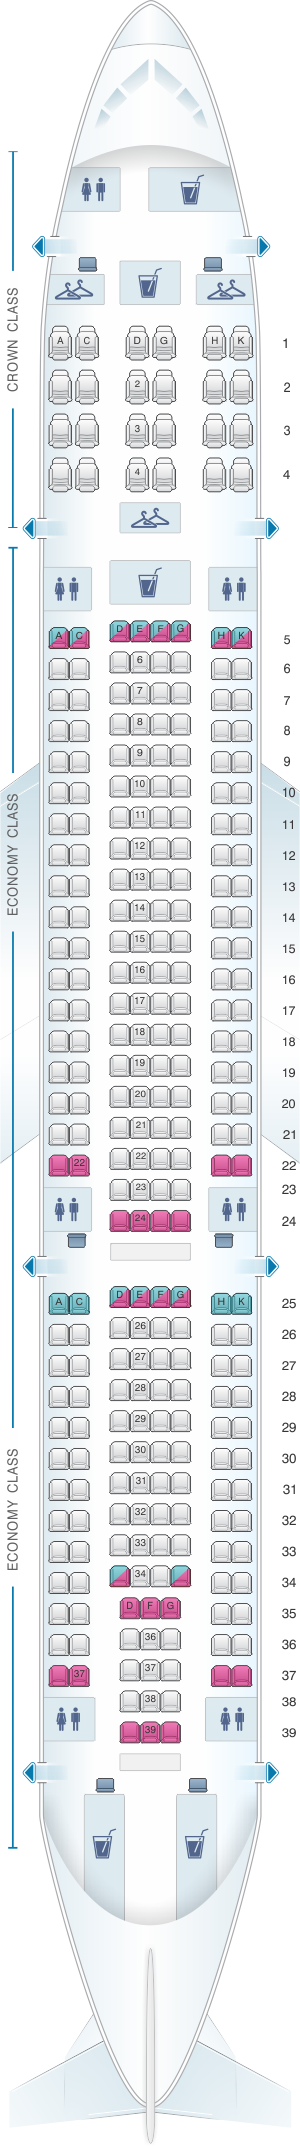 Seat map for Royal Jordanian Airbus A330 200